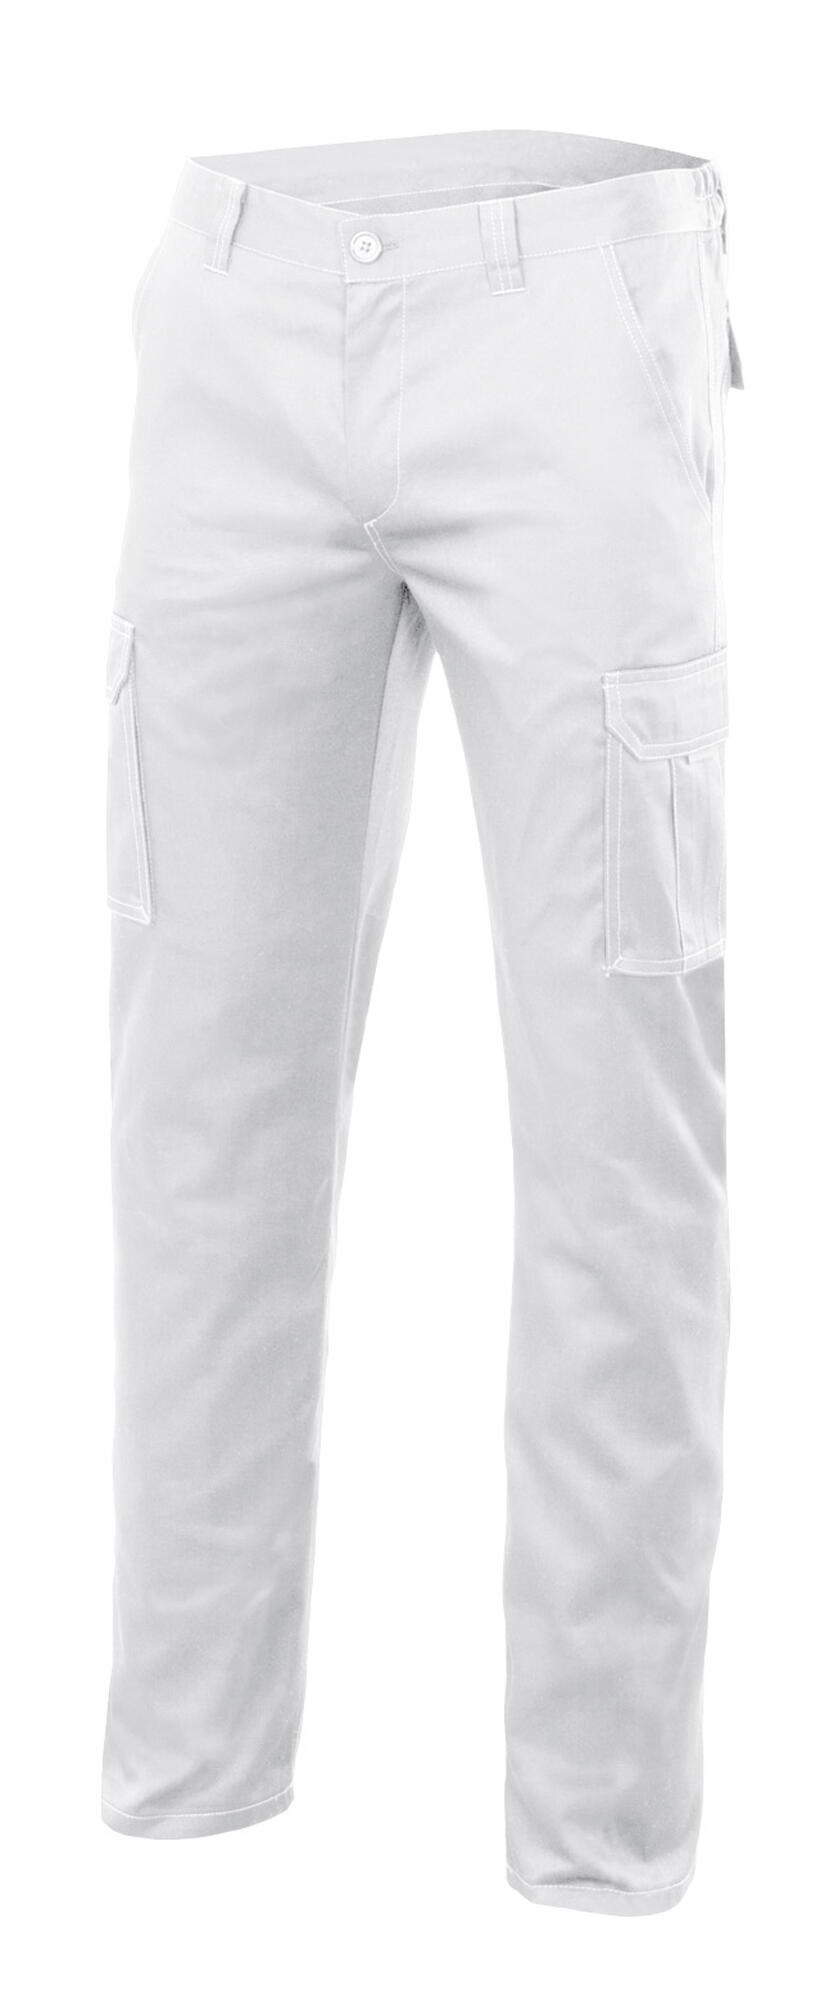 Pantalon de trabajo multibolsillo stretch blanco t50